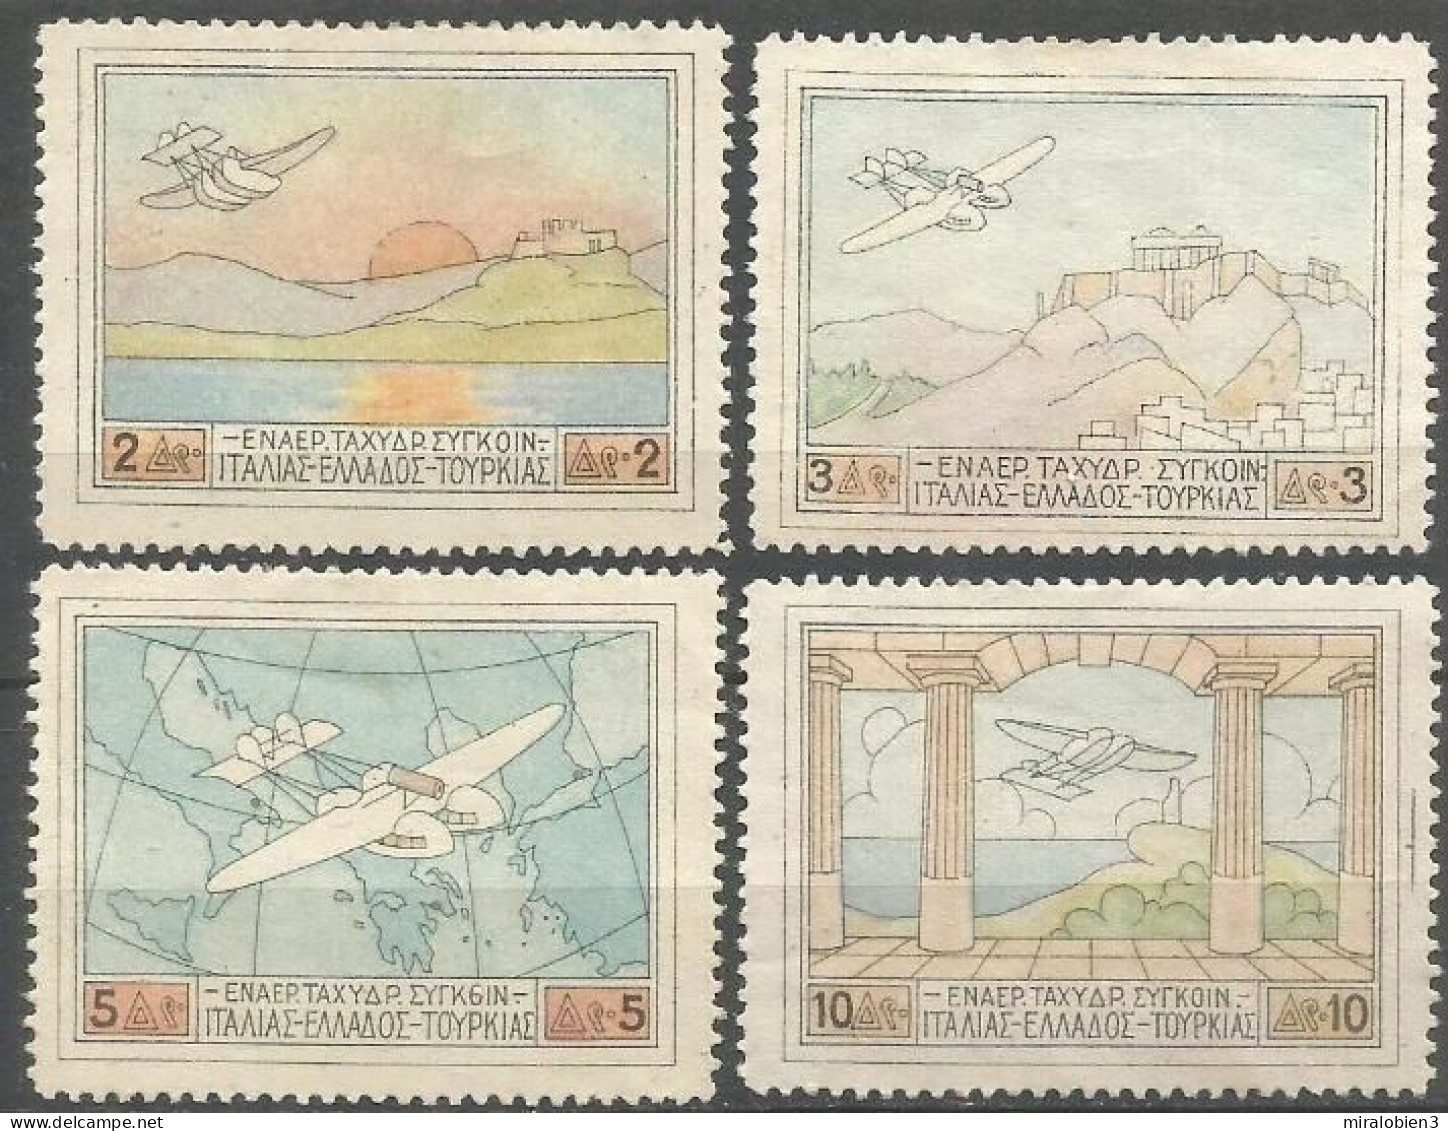 GRECIA CORREO AEREO YVERT NUM. 1/4 SERIE COMPLETA NUEVA SIN GOMA - Unused Stamps